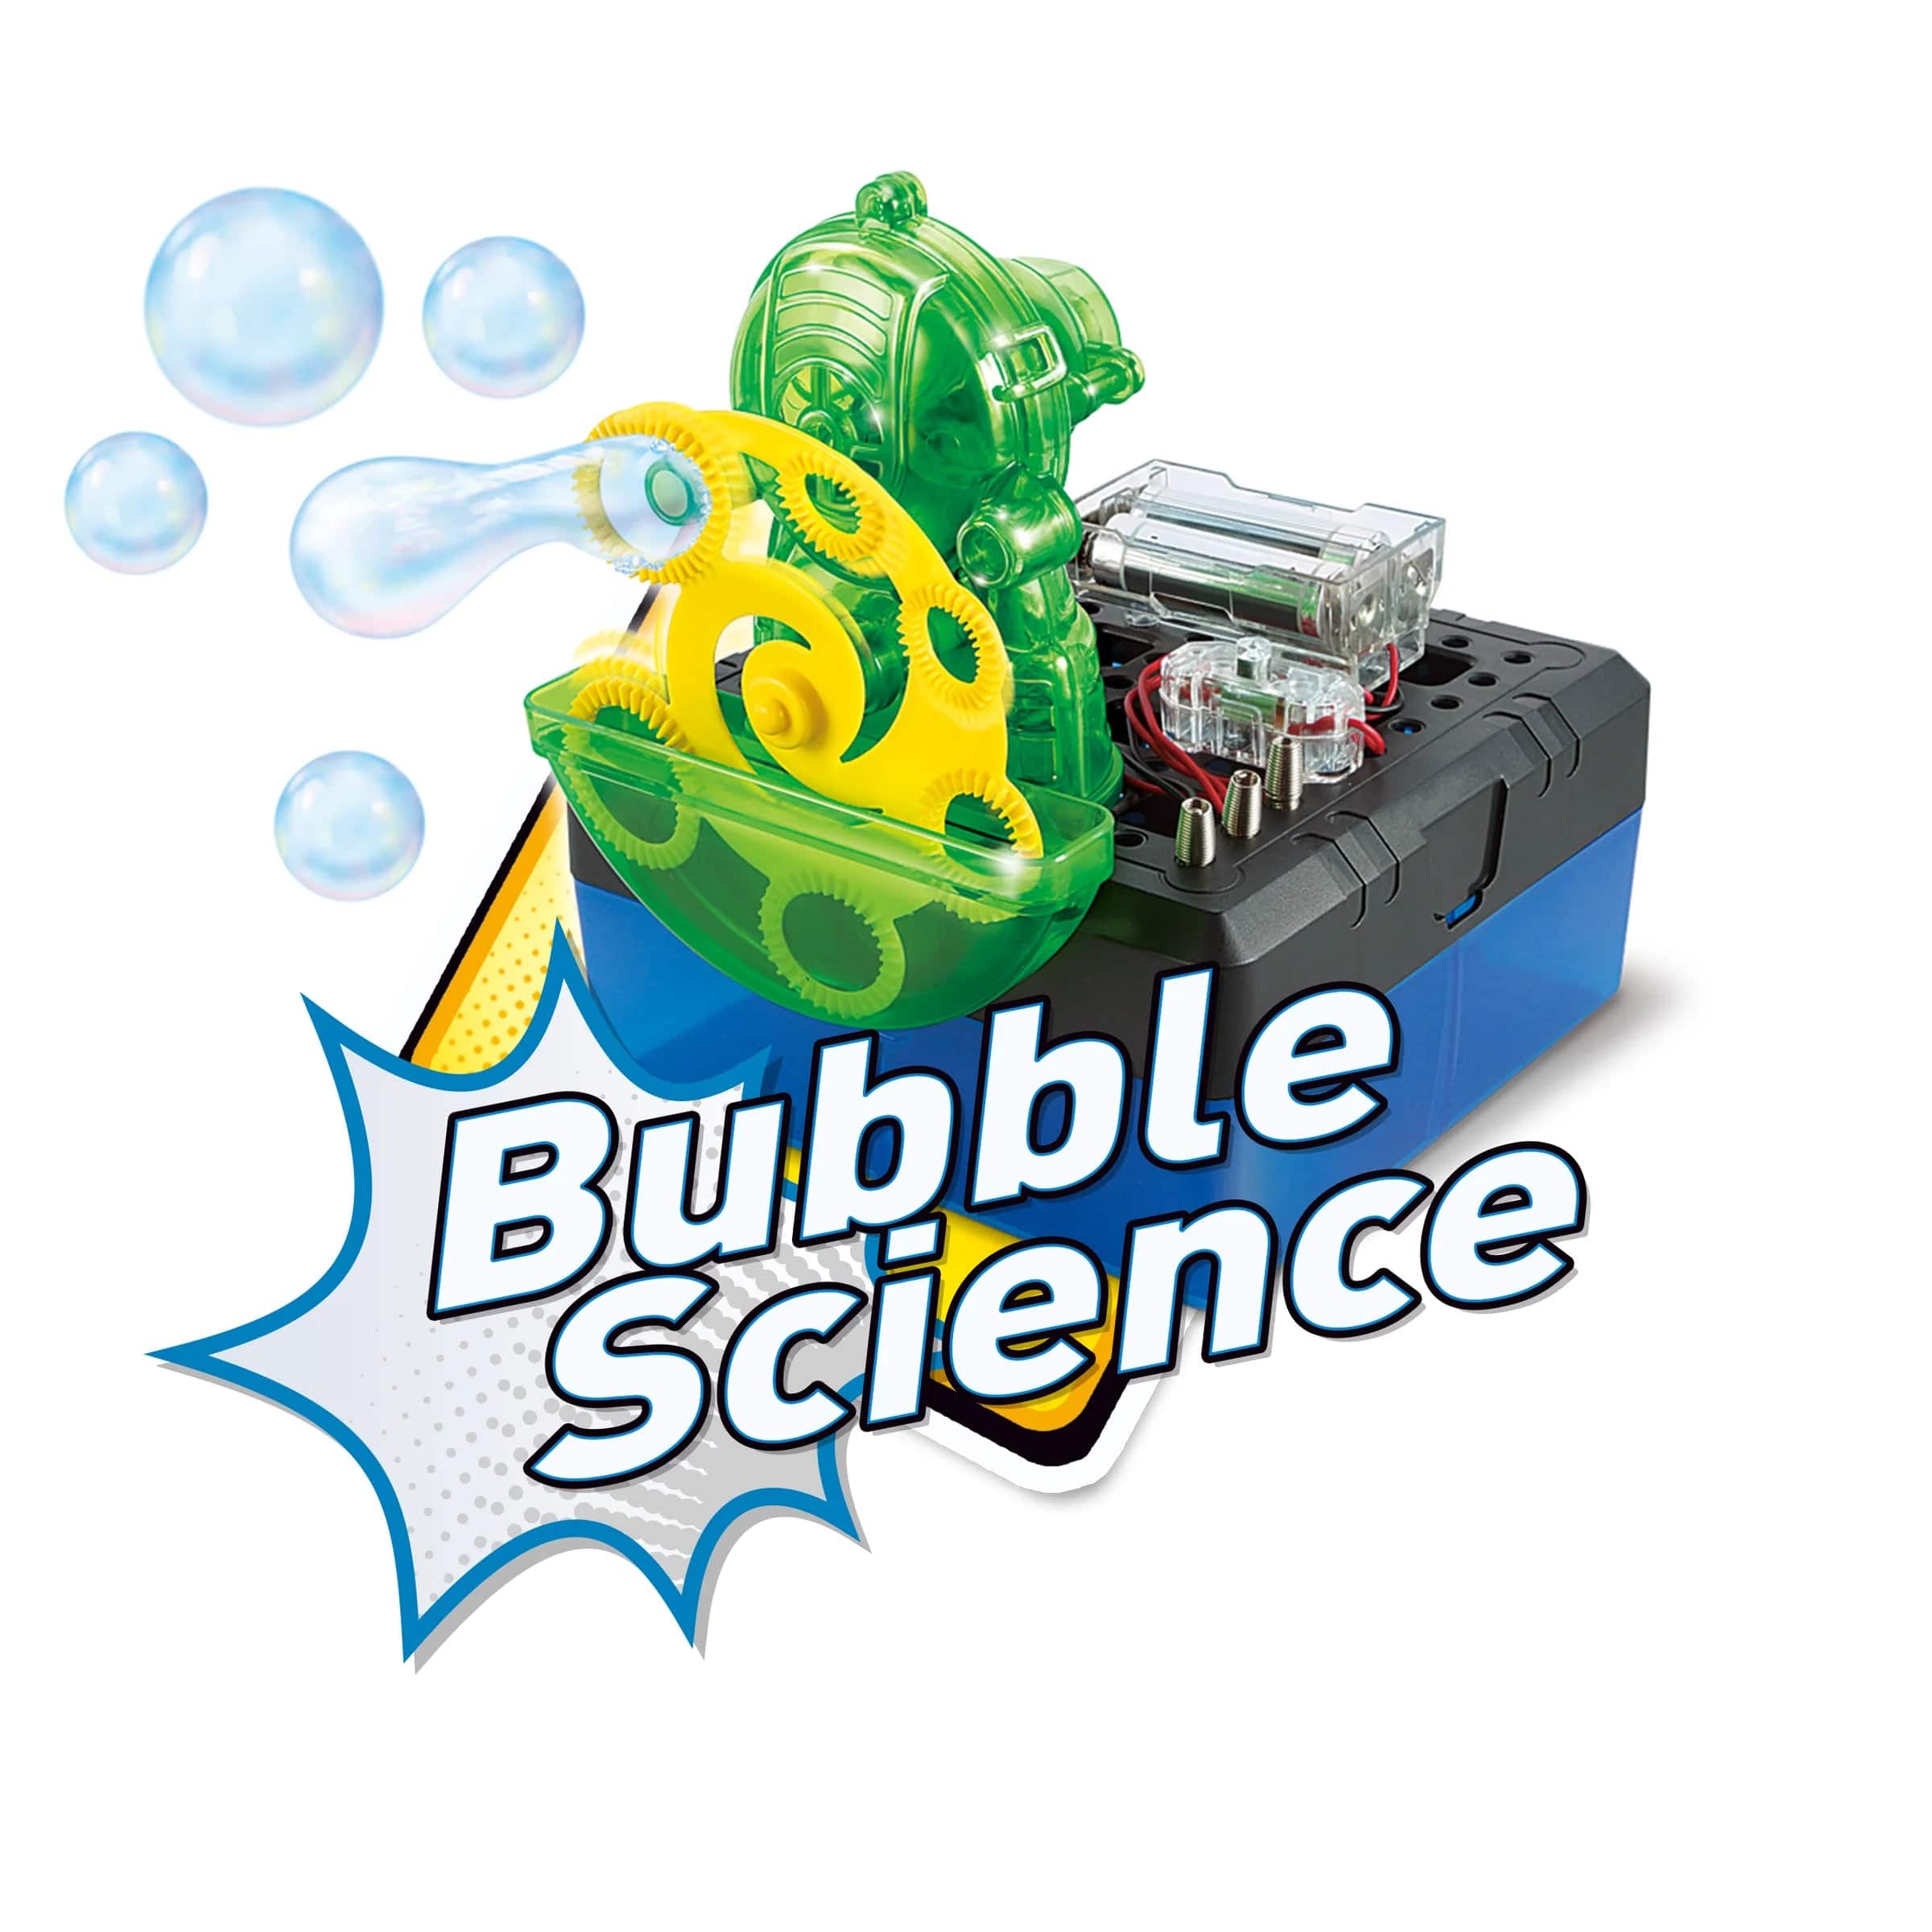 Explore Science Toy Explore Science 14 Electronic Science Set - STEM - 88-90135